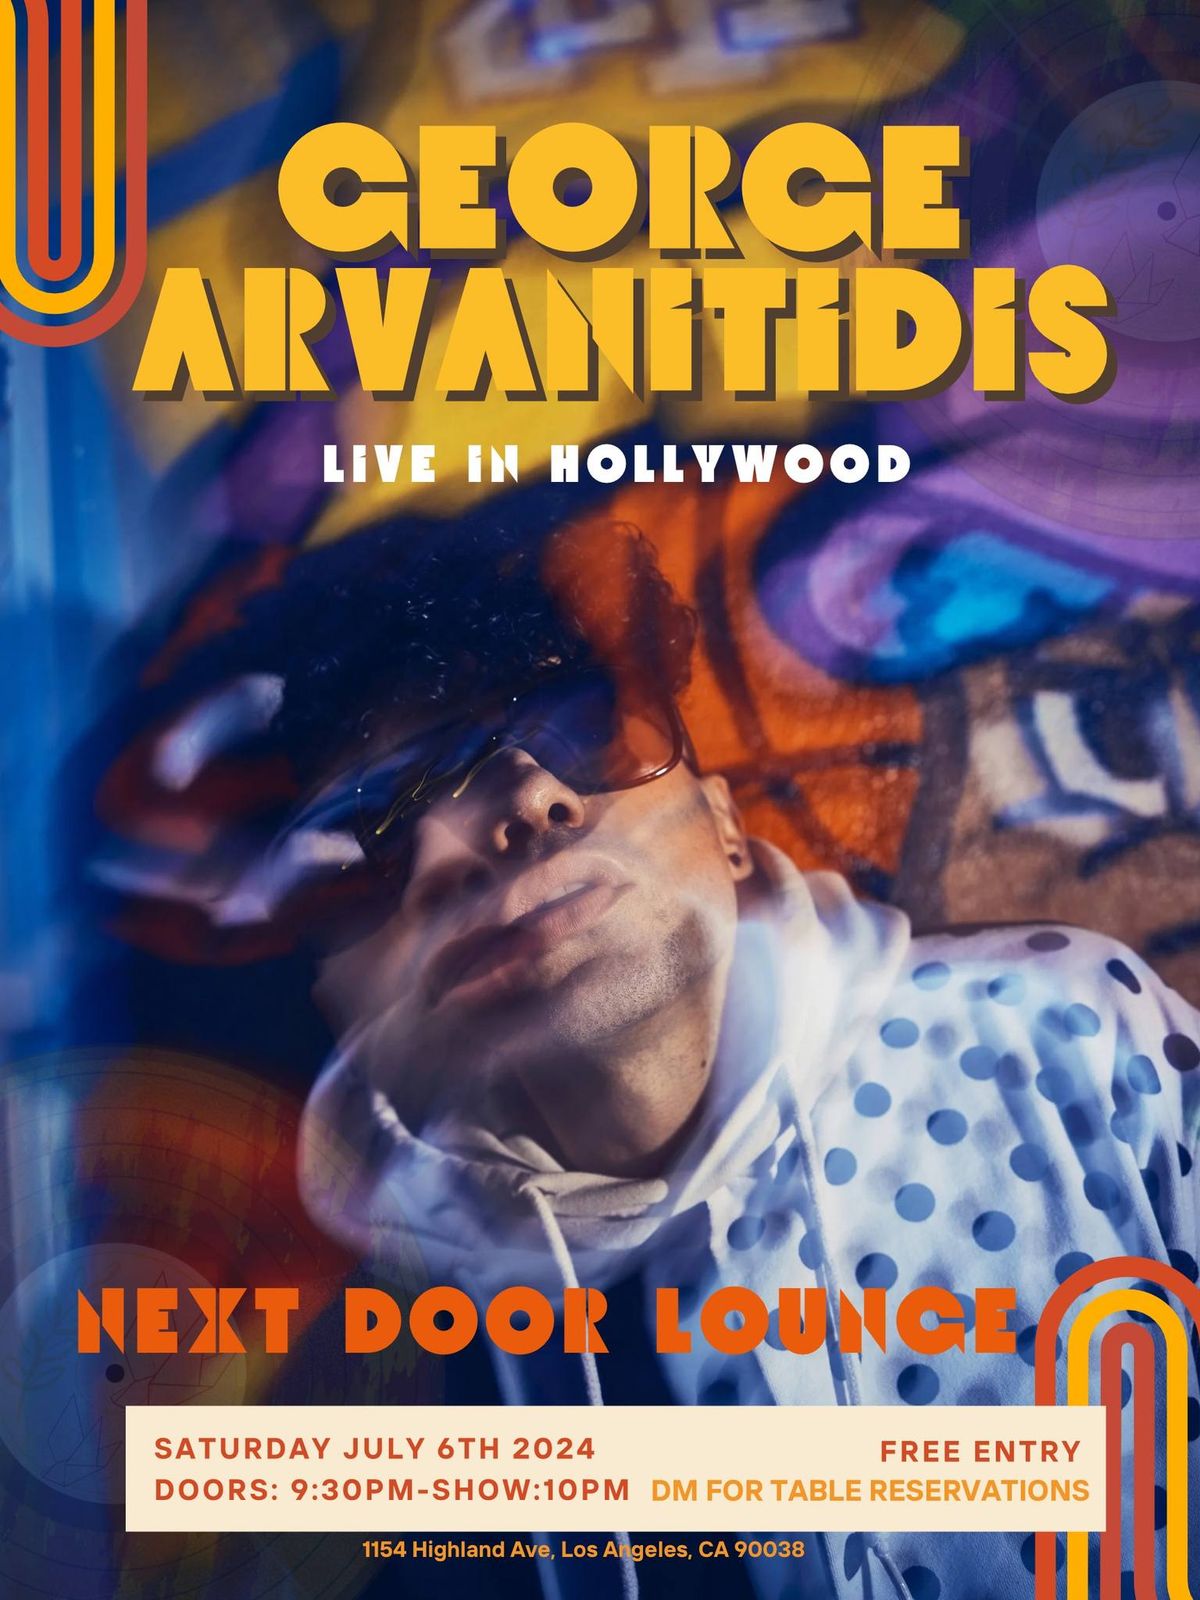 George Arvanitidis Single Release Concert